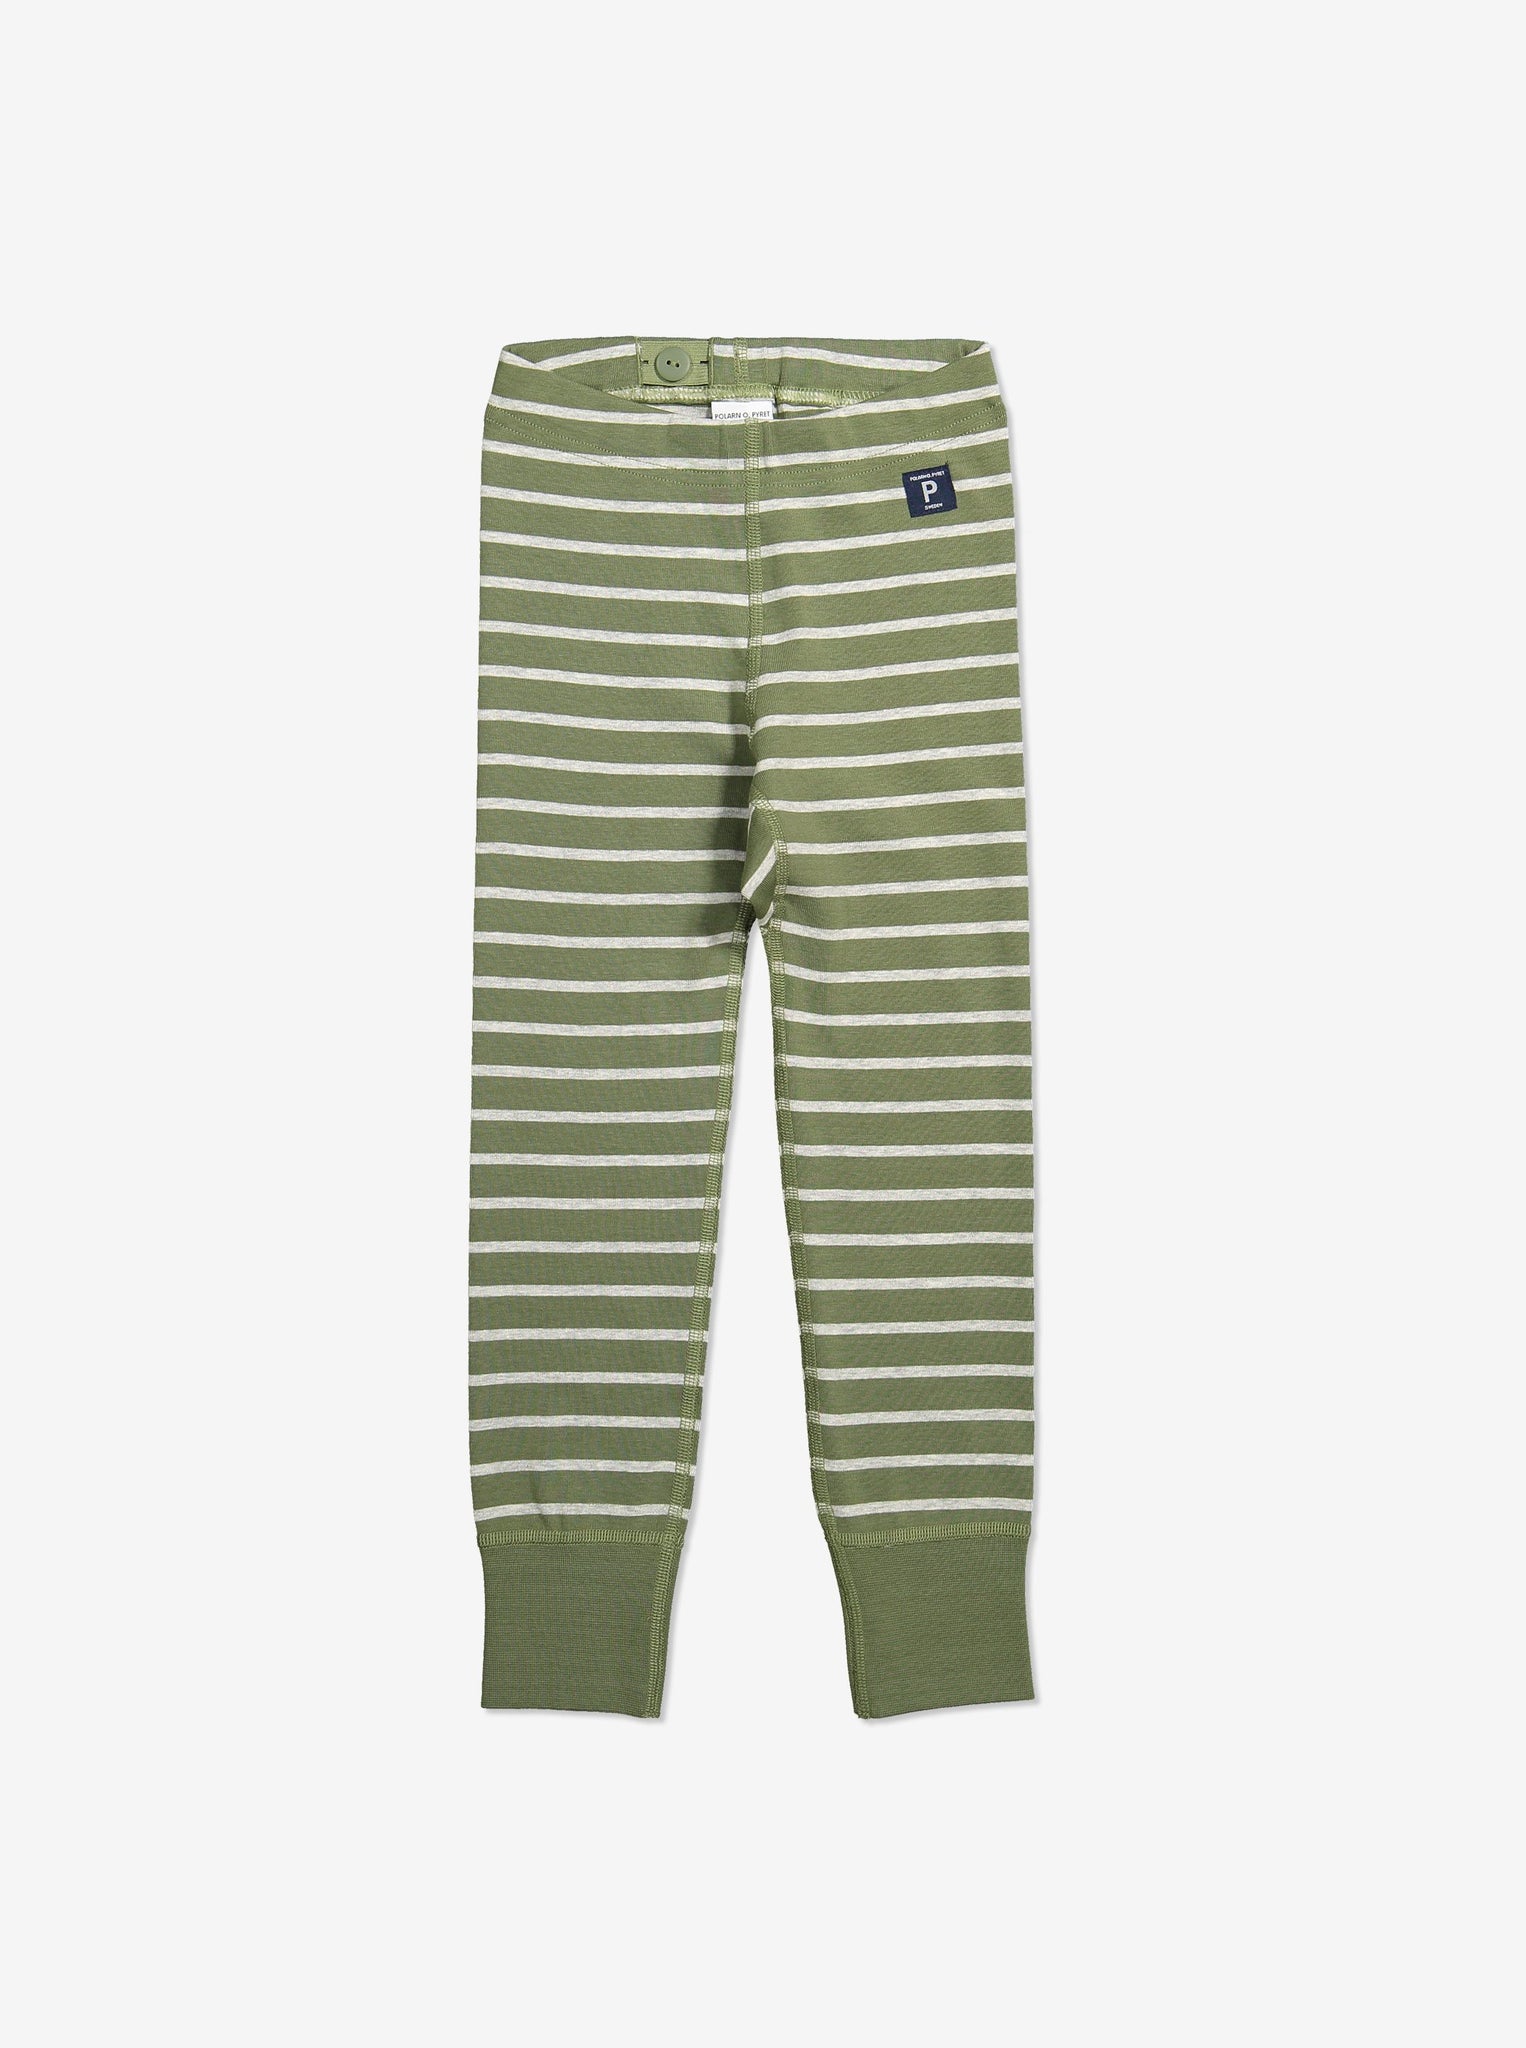 Striped Kids Leggings-Unisex-2m-6y-Green